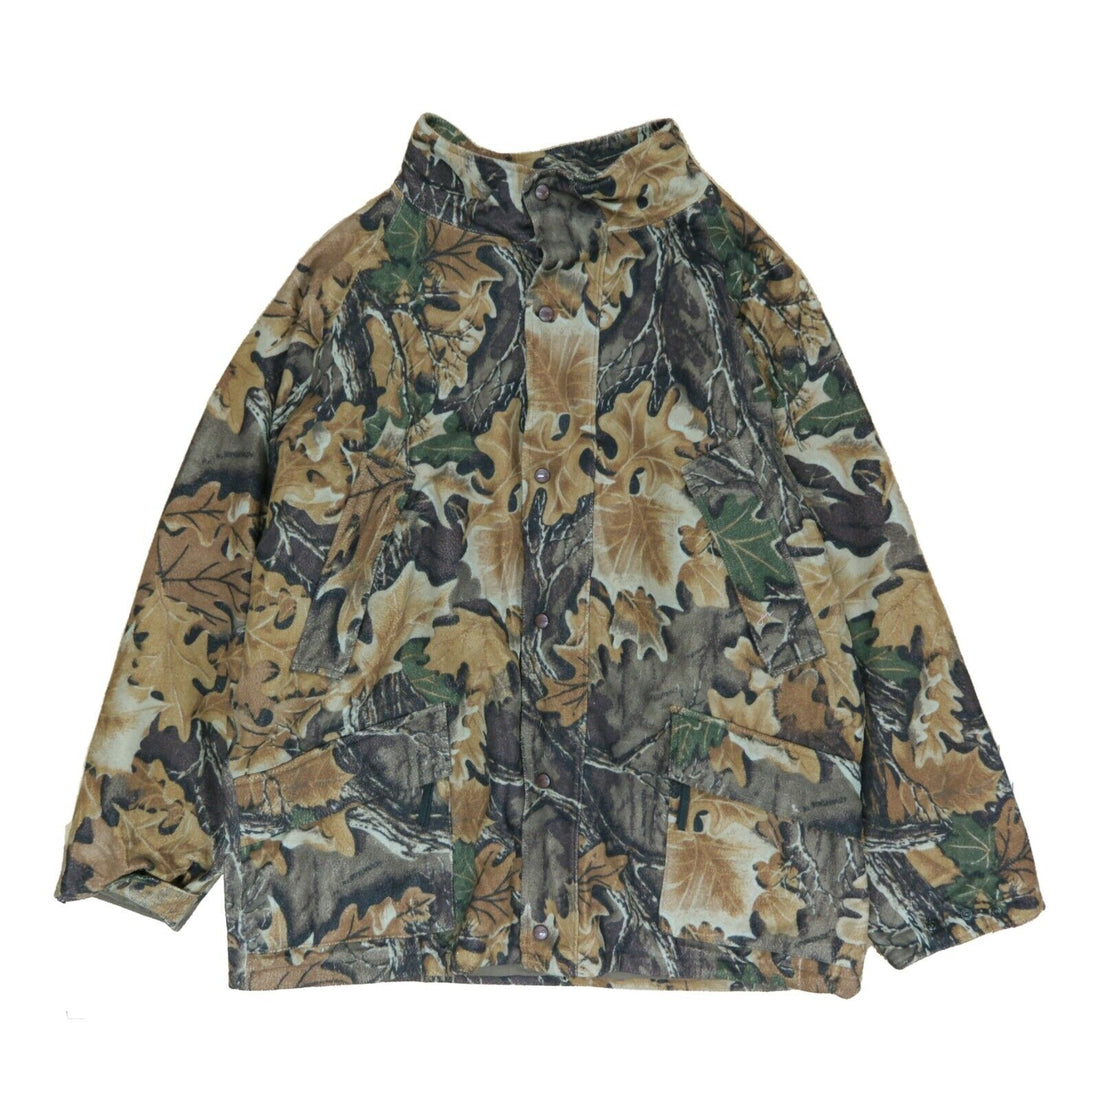 Vintage LL Bean Advantage Camouflage Coat Jacket Size XL Leaf Camo